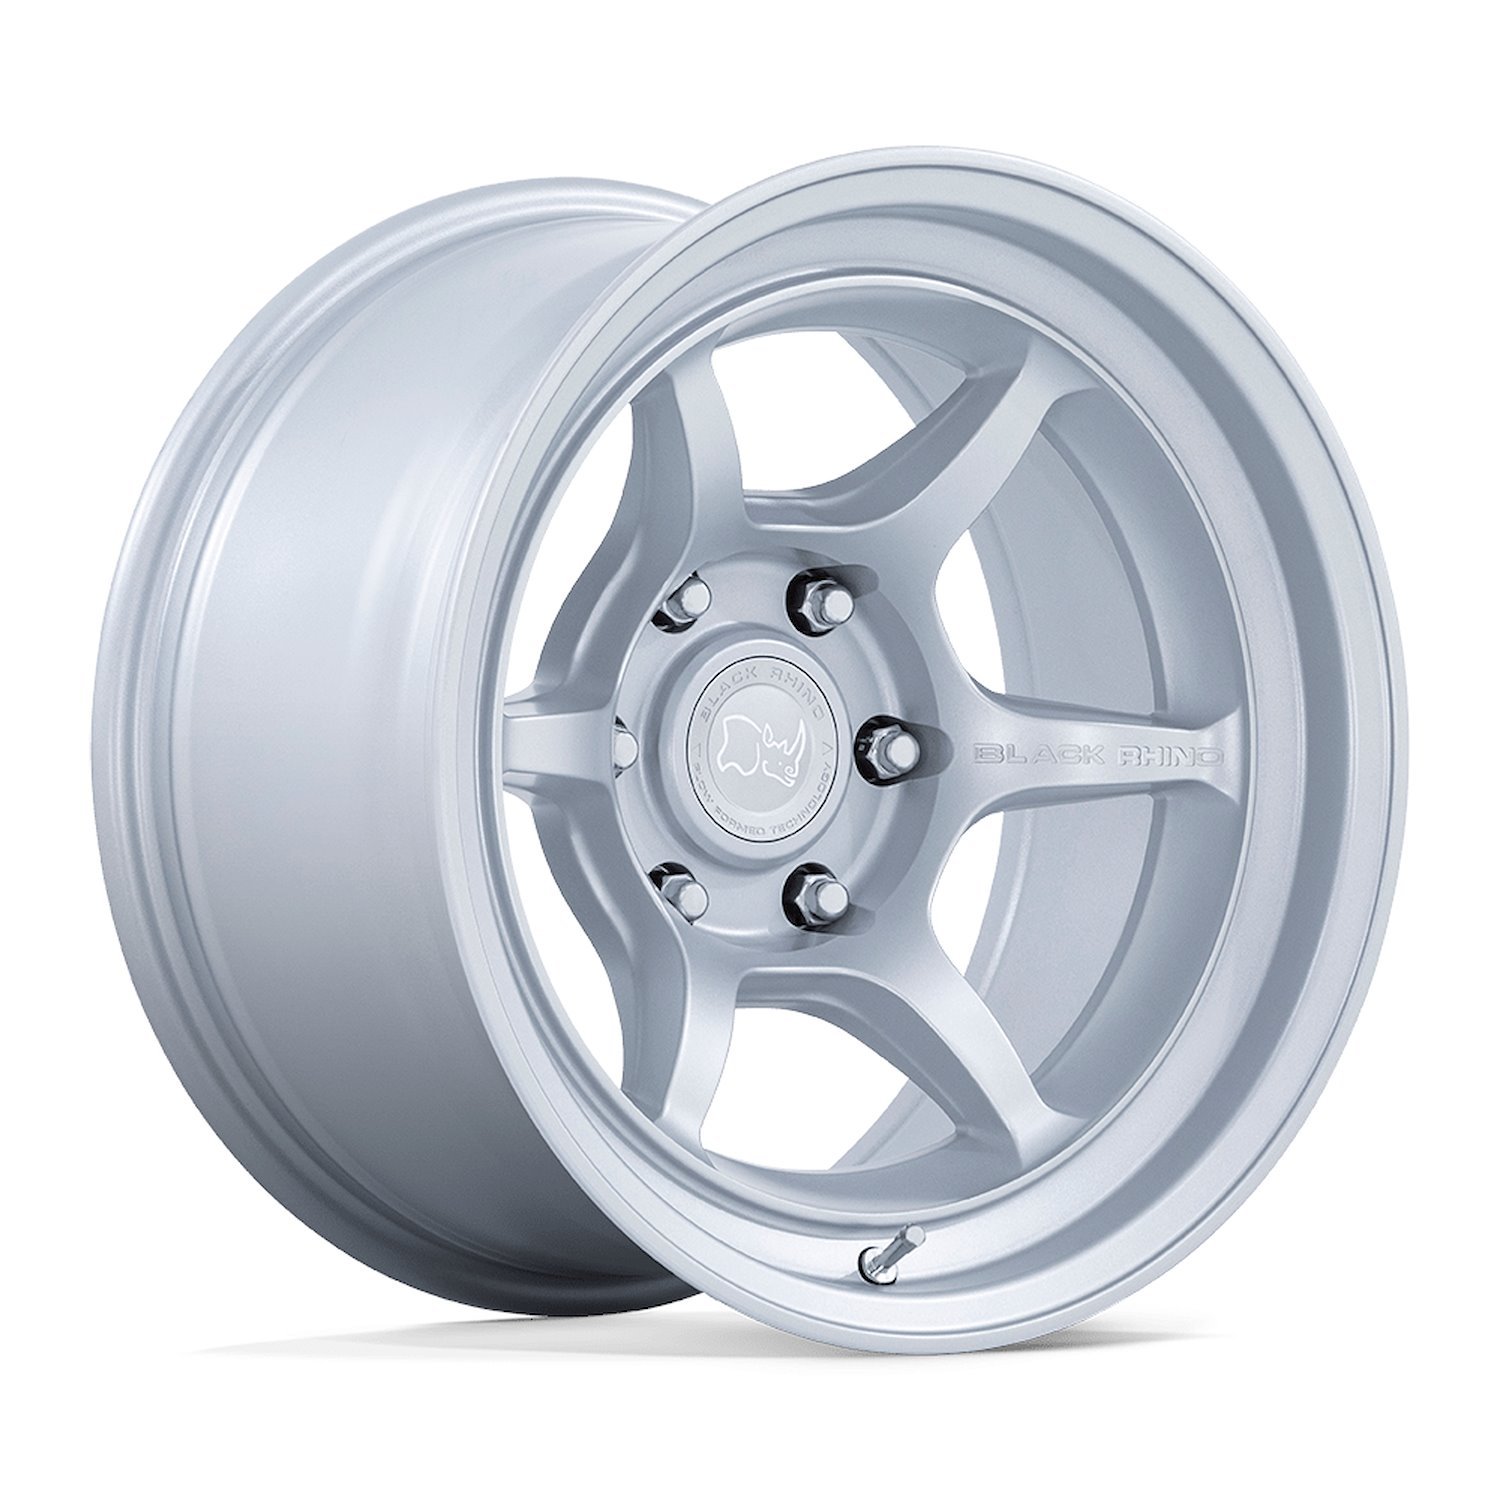 BR011SX16806810N SHOGUN Wheel [Size: 16" x 8"] Hyper Silver